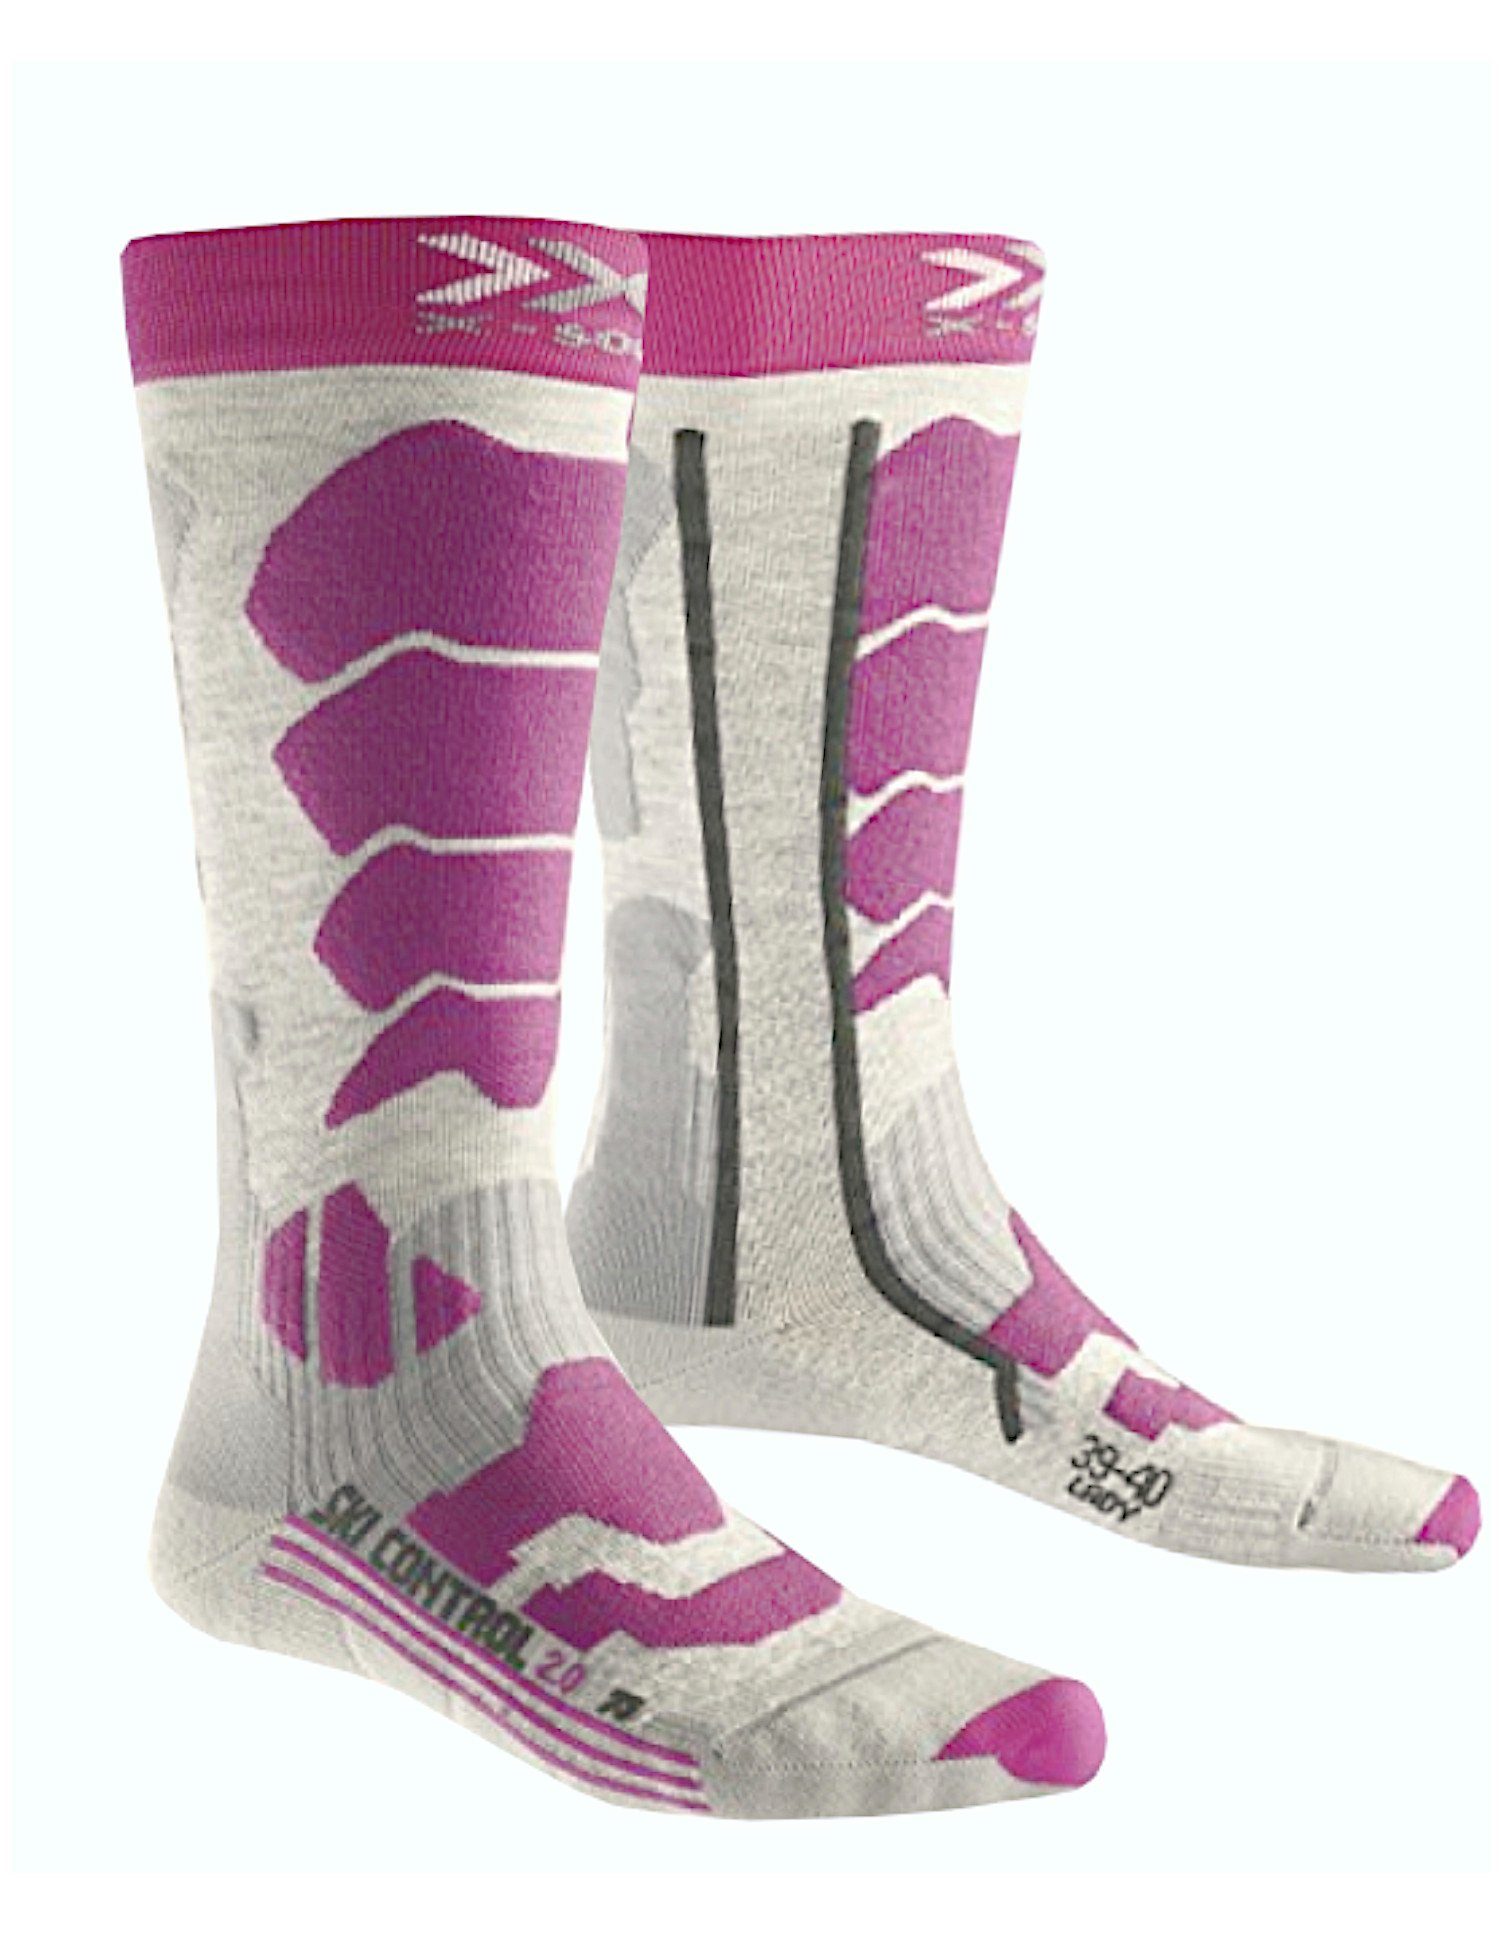 2.0 gepolsterte Control Dämpfungszonen Skisocken Women Ski X-Socks grau-lila